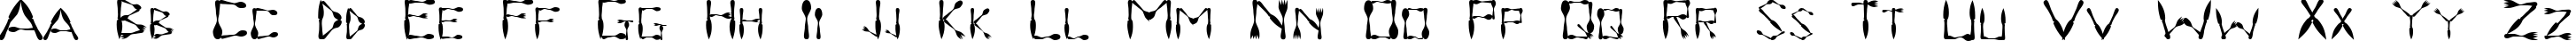 Пример написания английского алфавита шрифтом DinnerTime